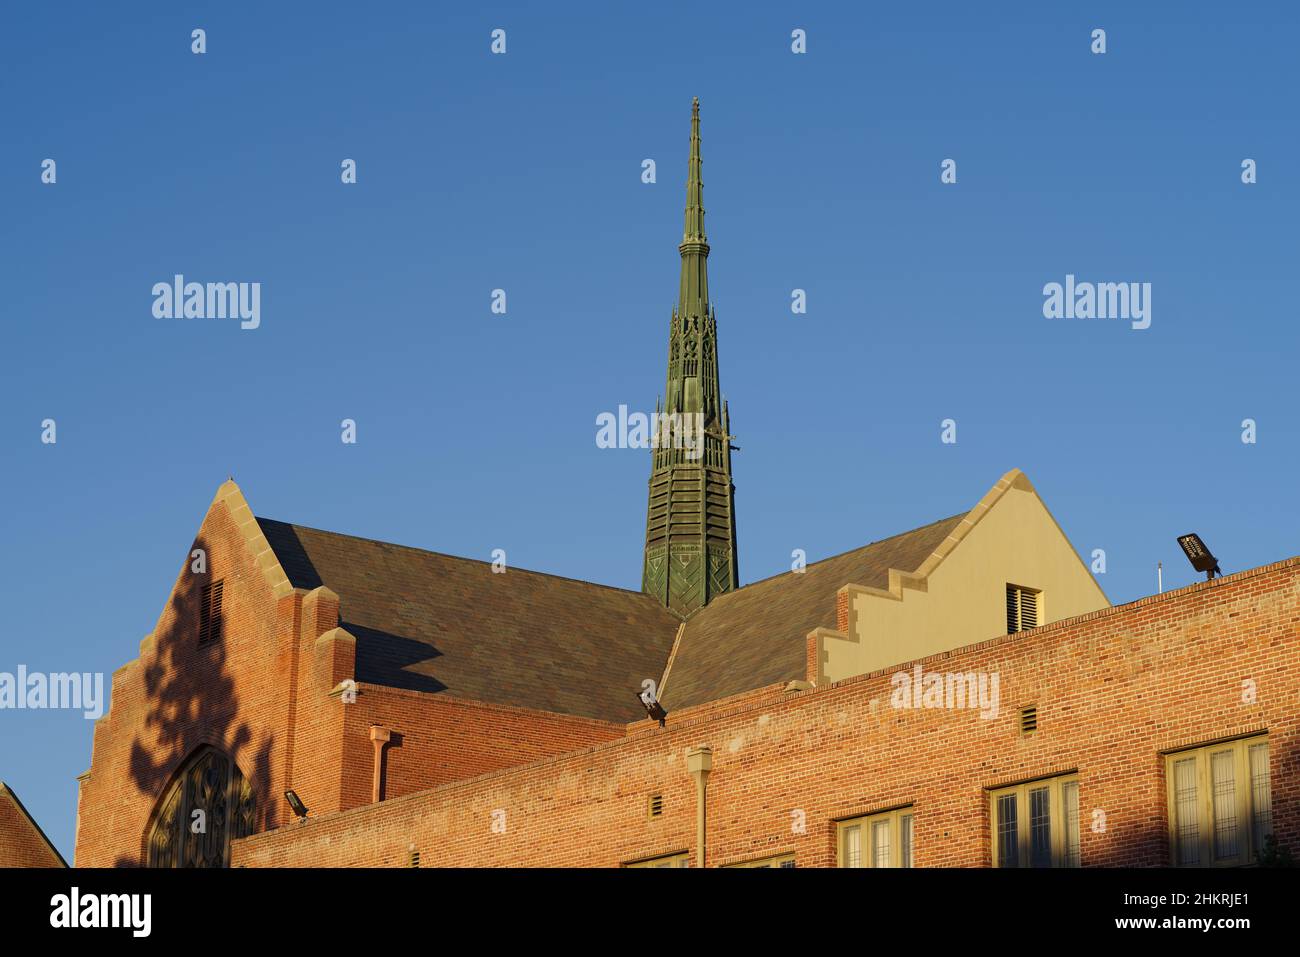 Toit et clocher de la First United Methodist Church contre un ciel bleu de l'après-midi. Banque D'Images